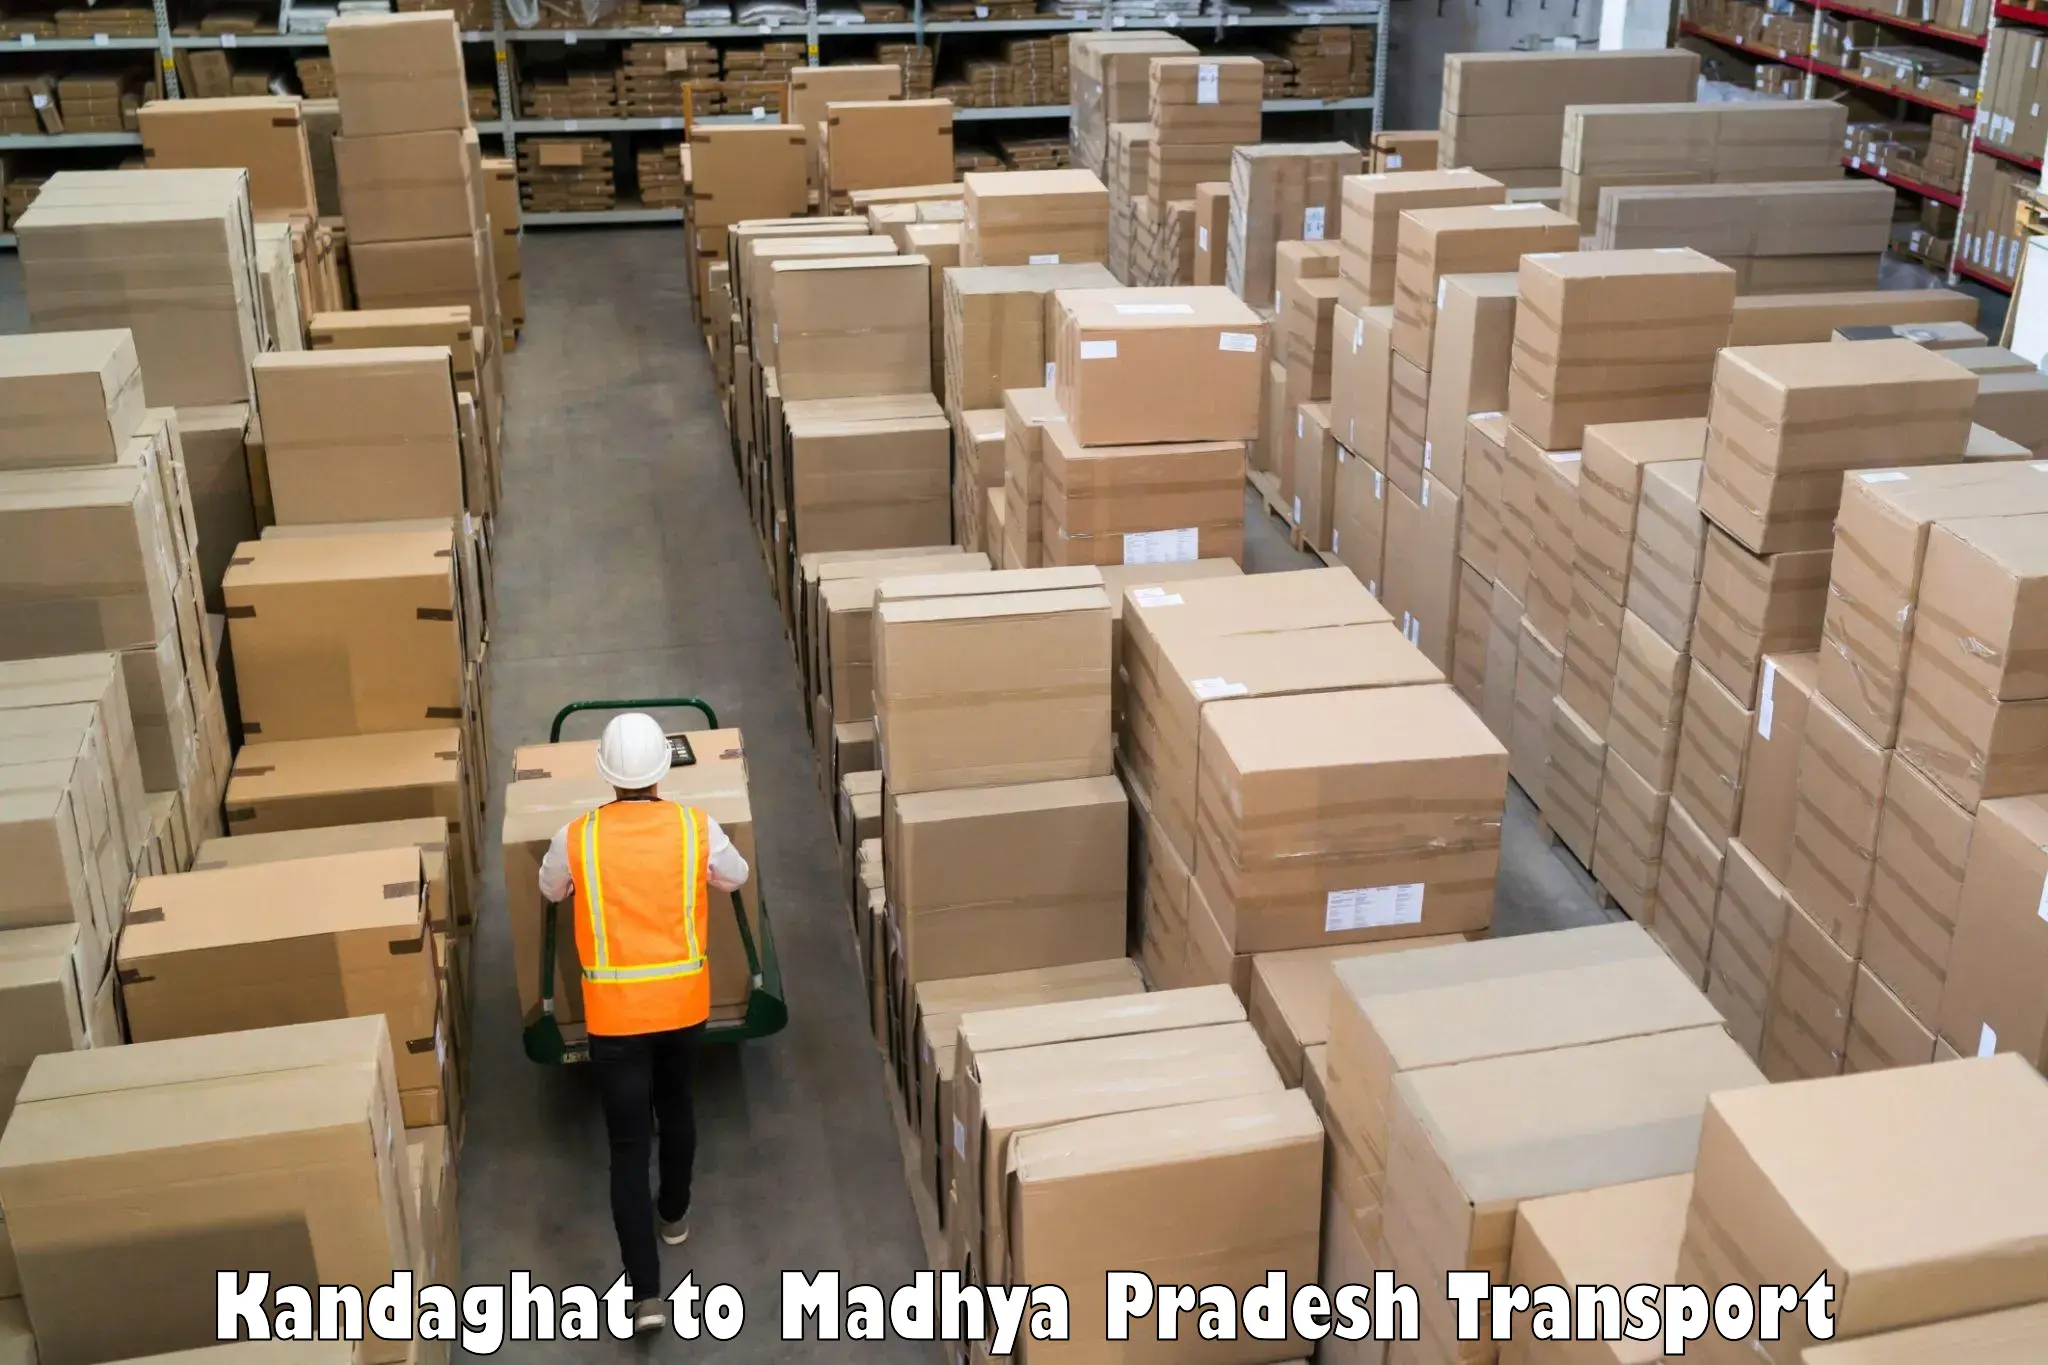 Truck transport companies in India Kandaghat to Chhindwara